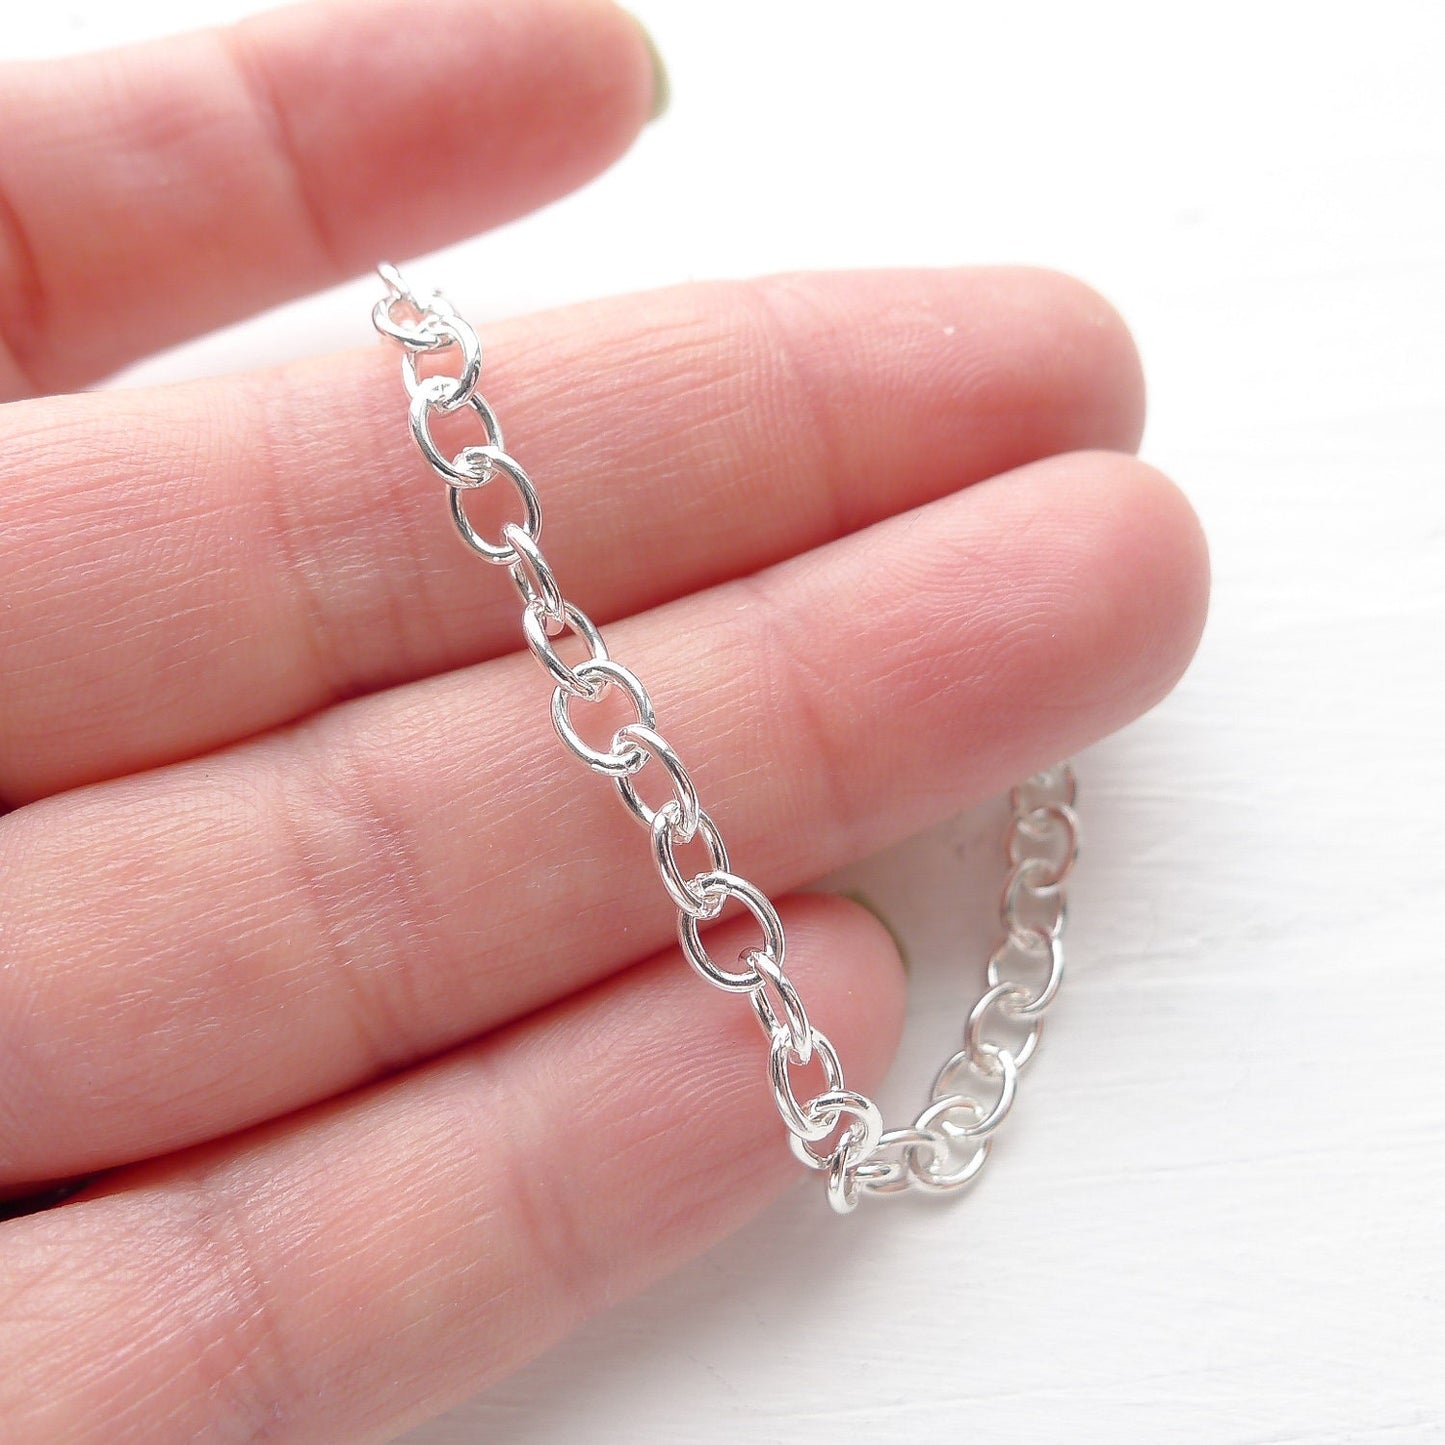 Charm Bracelet Chain Sterling Silver